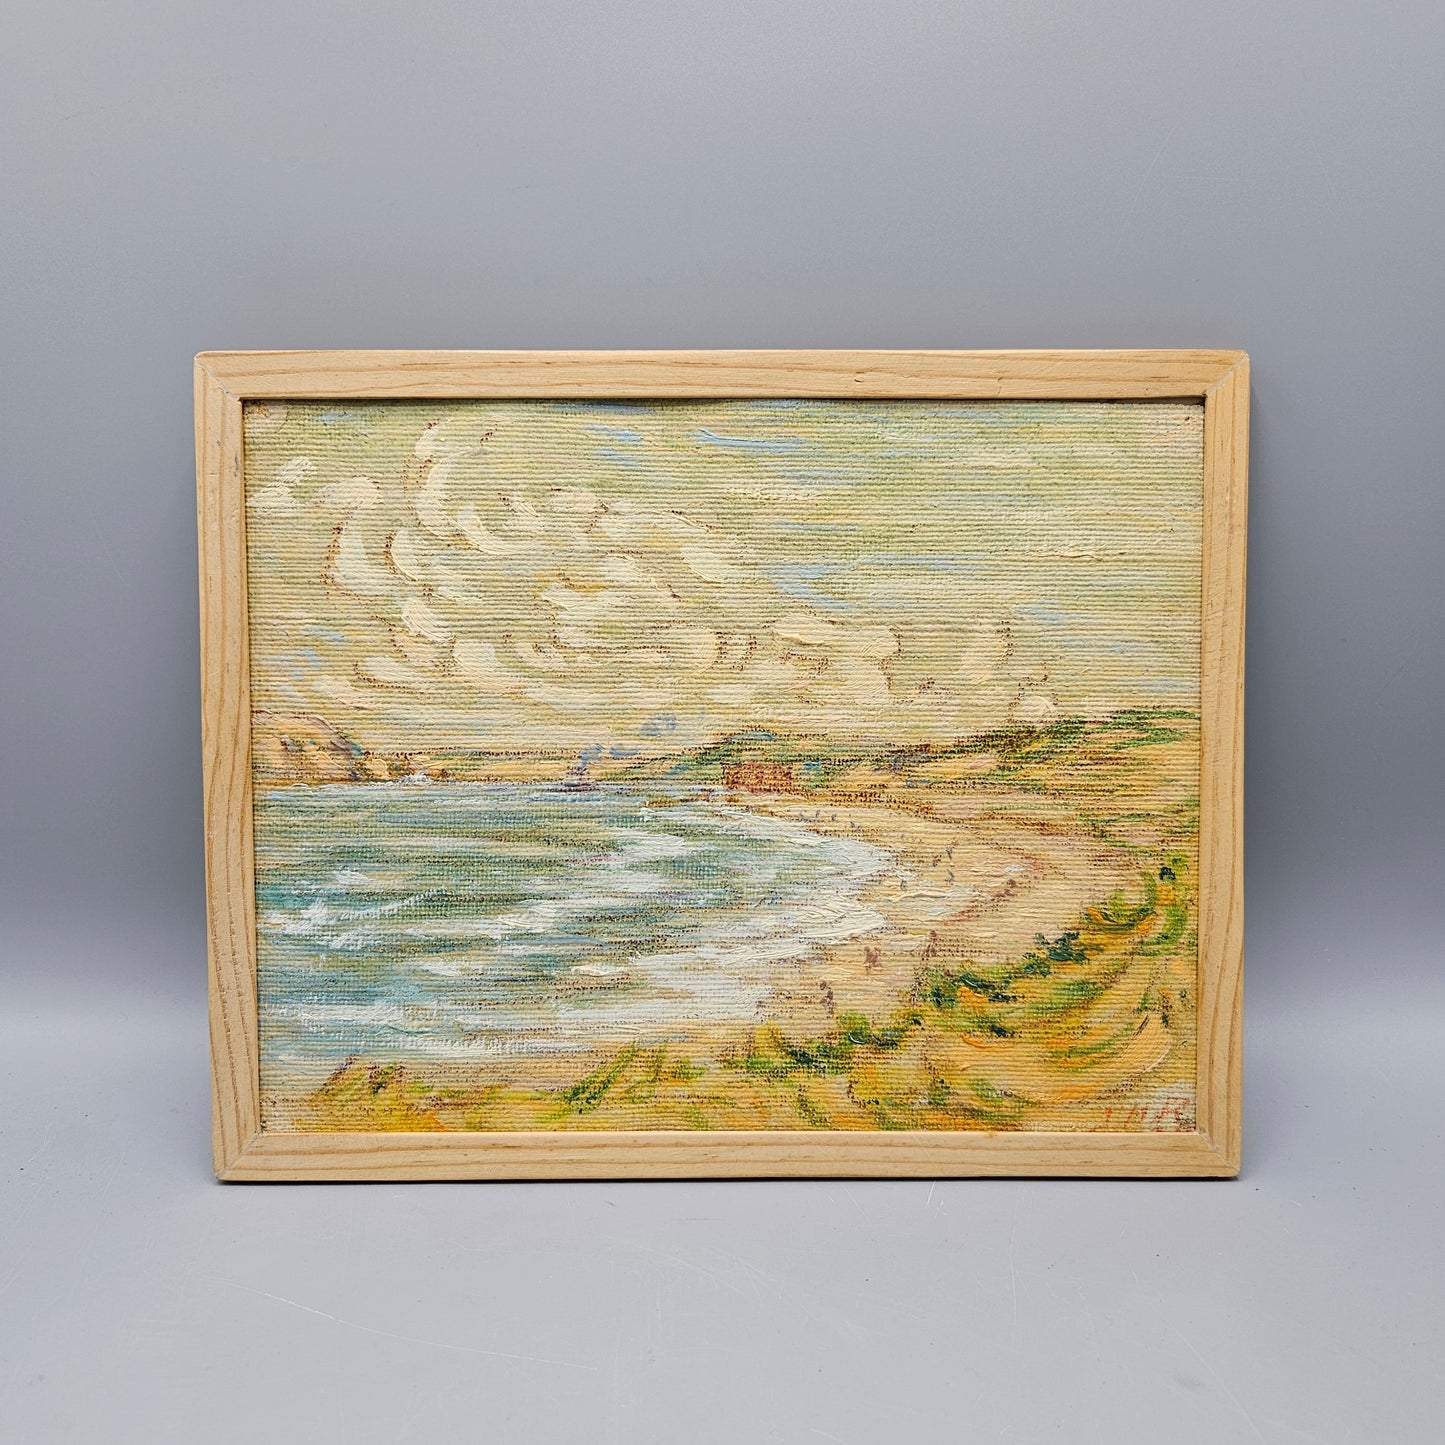 John Henry Ramm (1879-1948) Oil on Board "The Gate and Breaker's Beach"